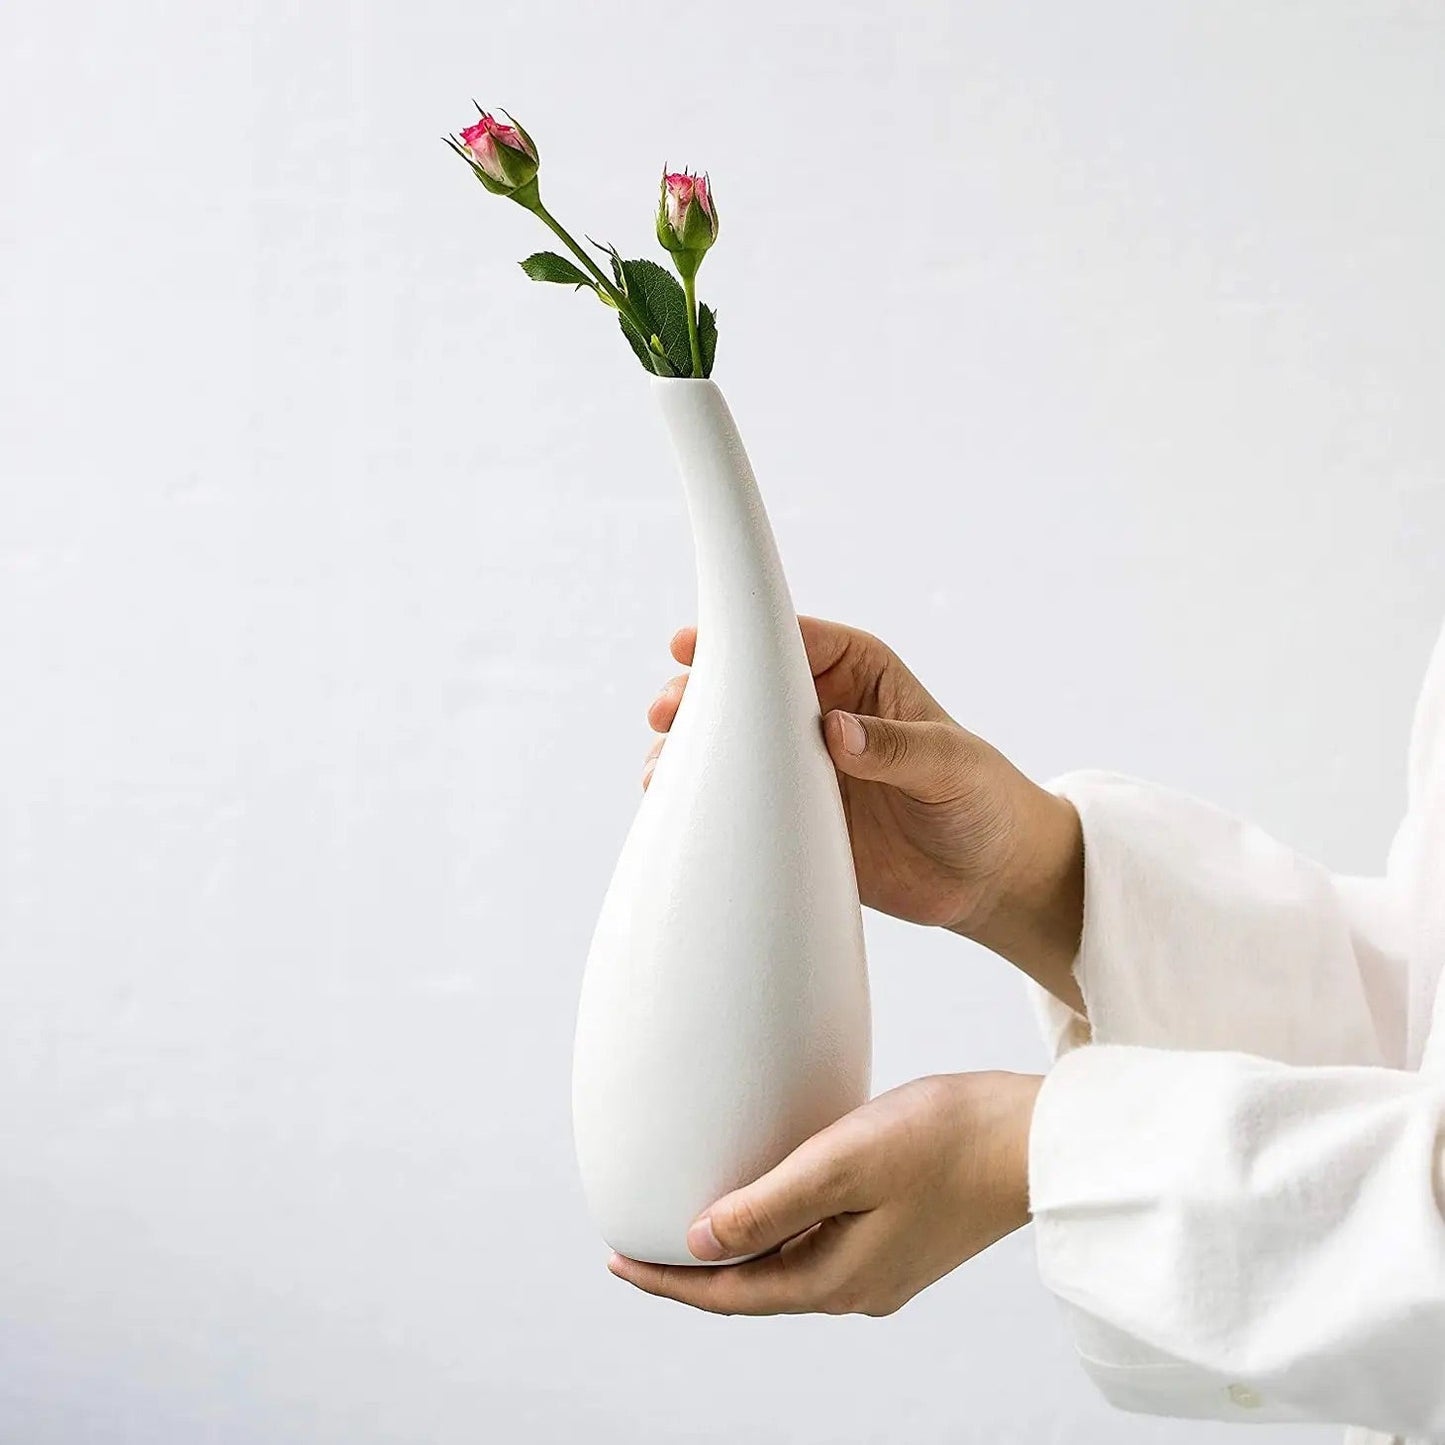 Set 3 Ceramic Vase, White Modern Vase and Fire Mantle modern minimalist centerpiece nordic trendy boho light curve large bottom and skinny top